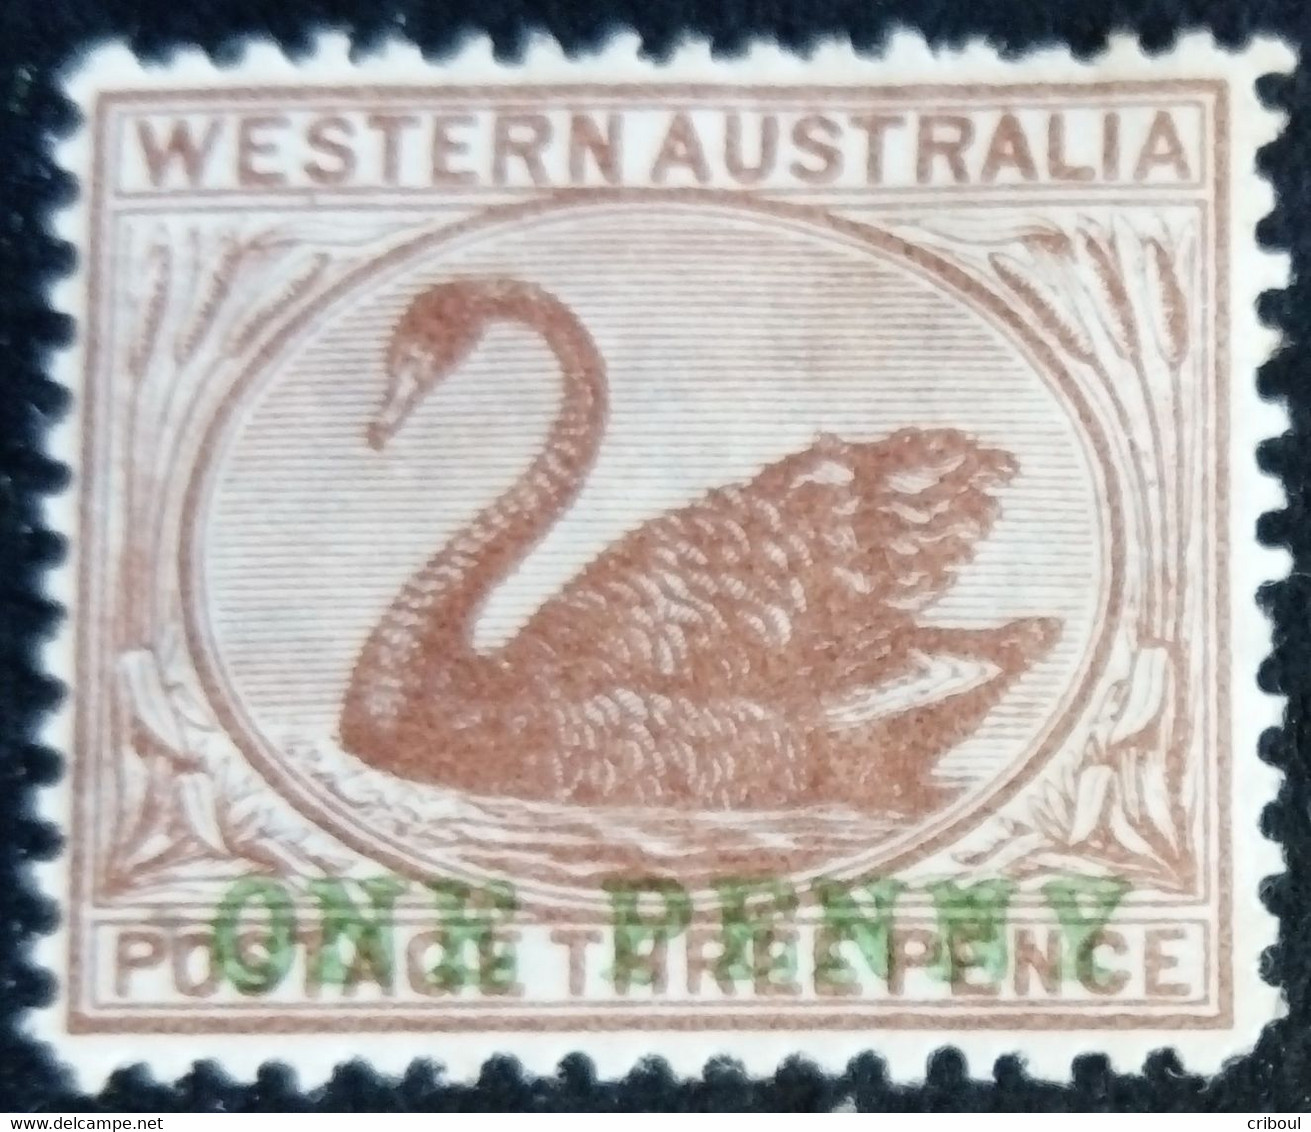 Australie Occidentale Western Australia 1893 Filigrane Couronne CC Watermark Crown CC Surchargé ONE PENNY Yvert 51 * MH - Swans